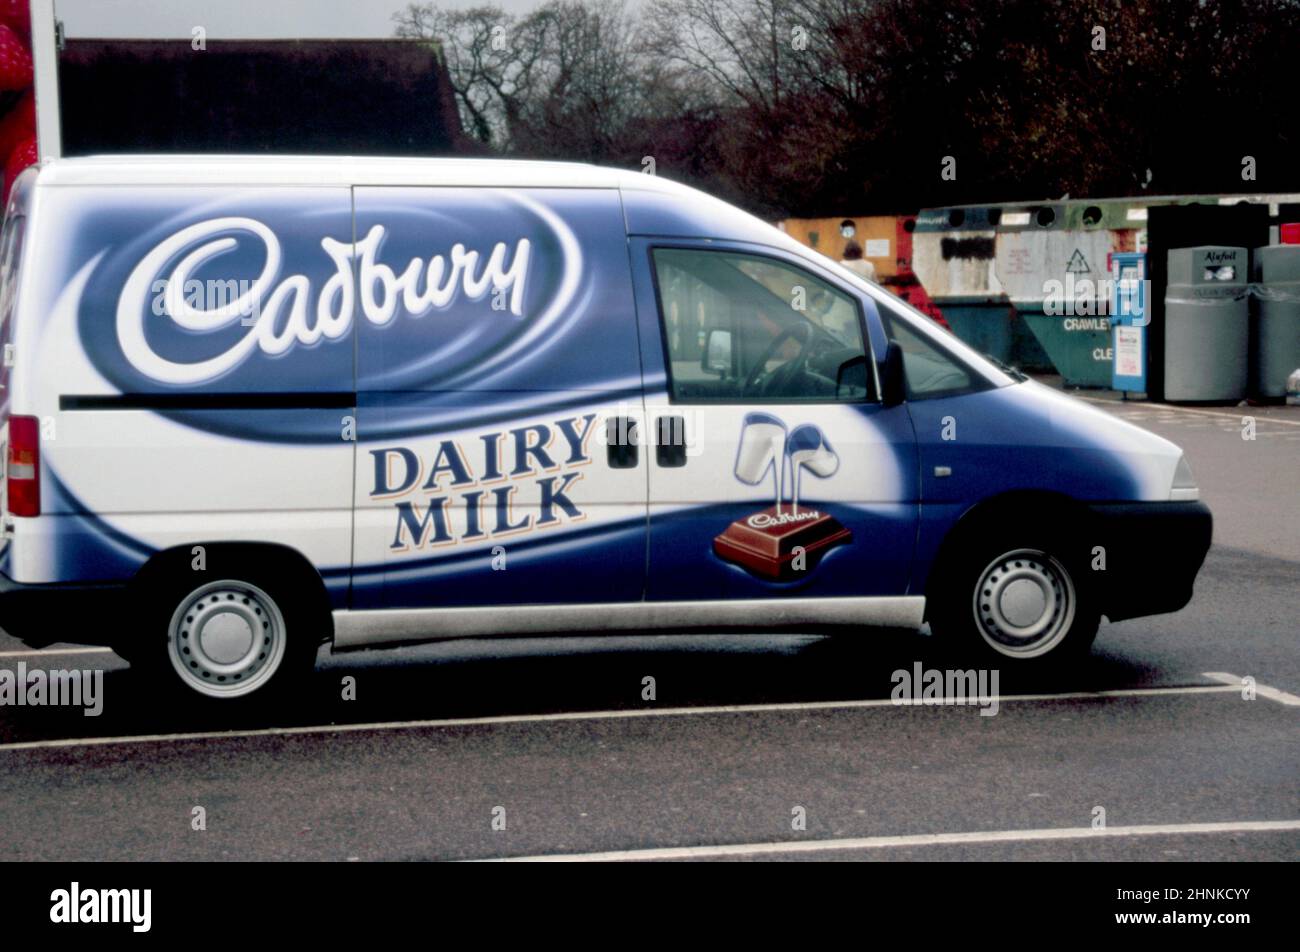 Cadbury Dairy Milk delivery van. cadburys  owned by Mondelez International Stock Photo